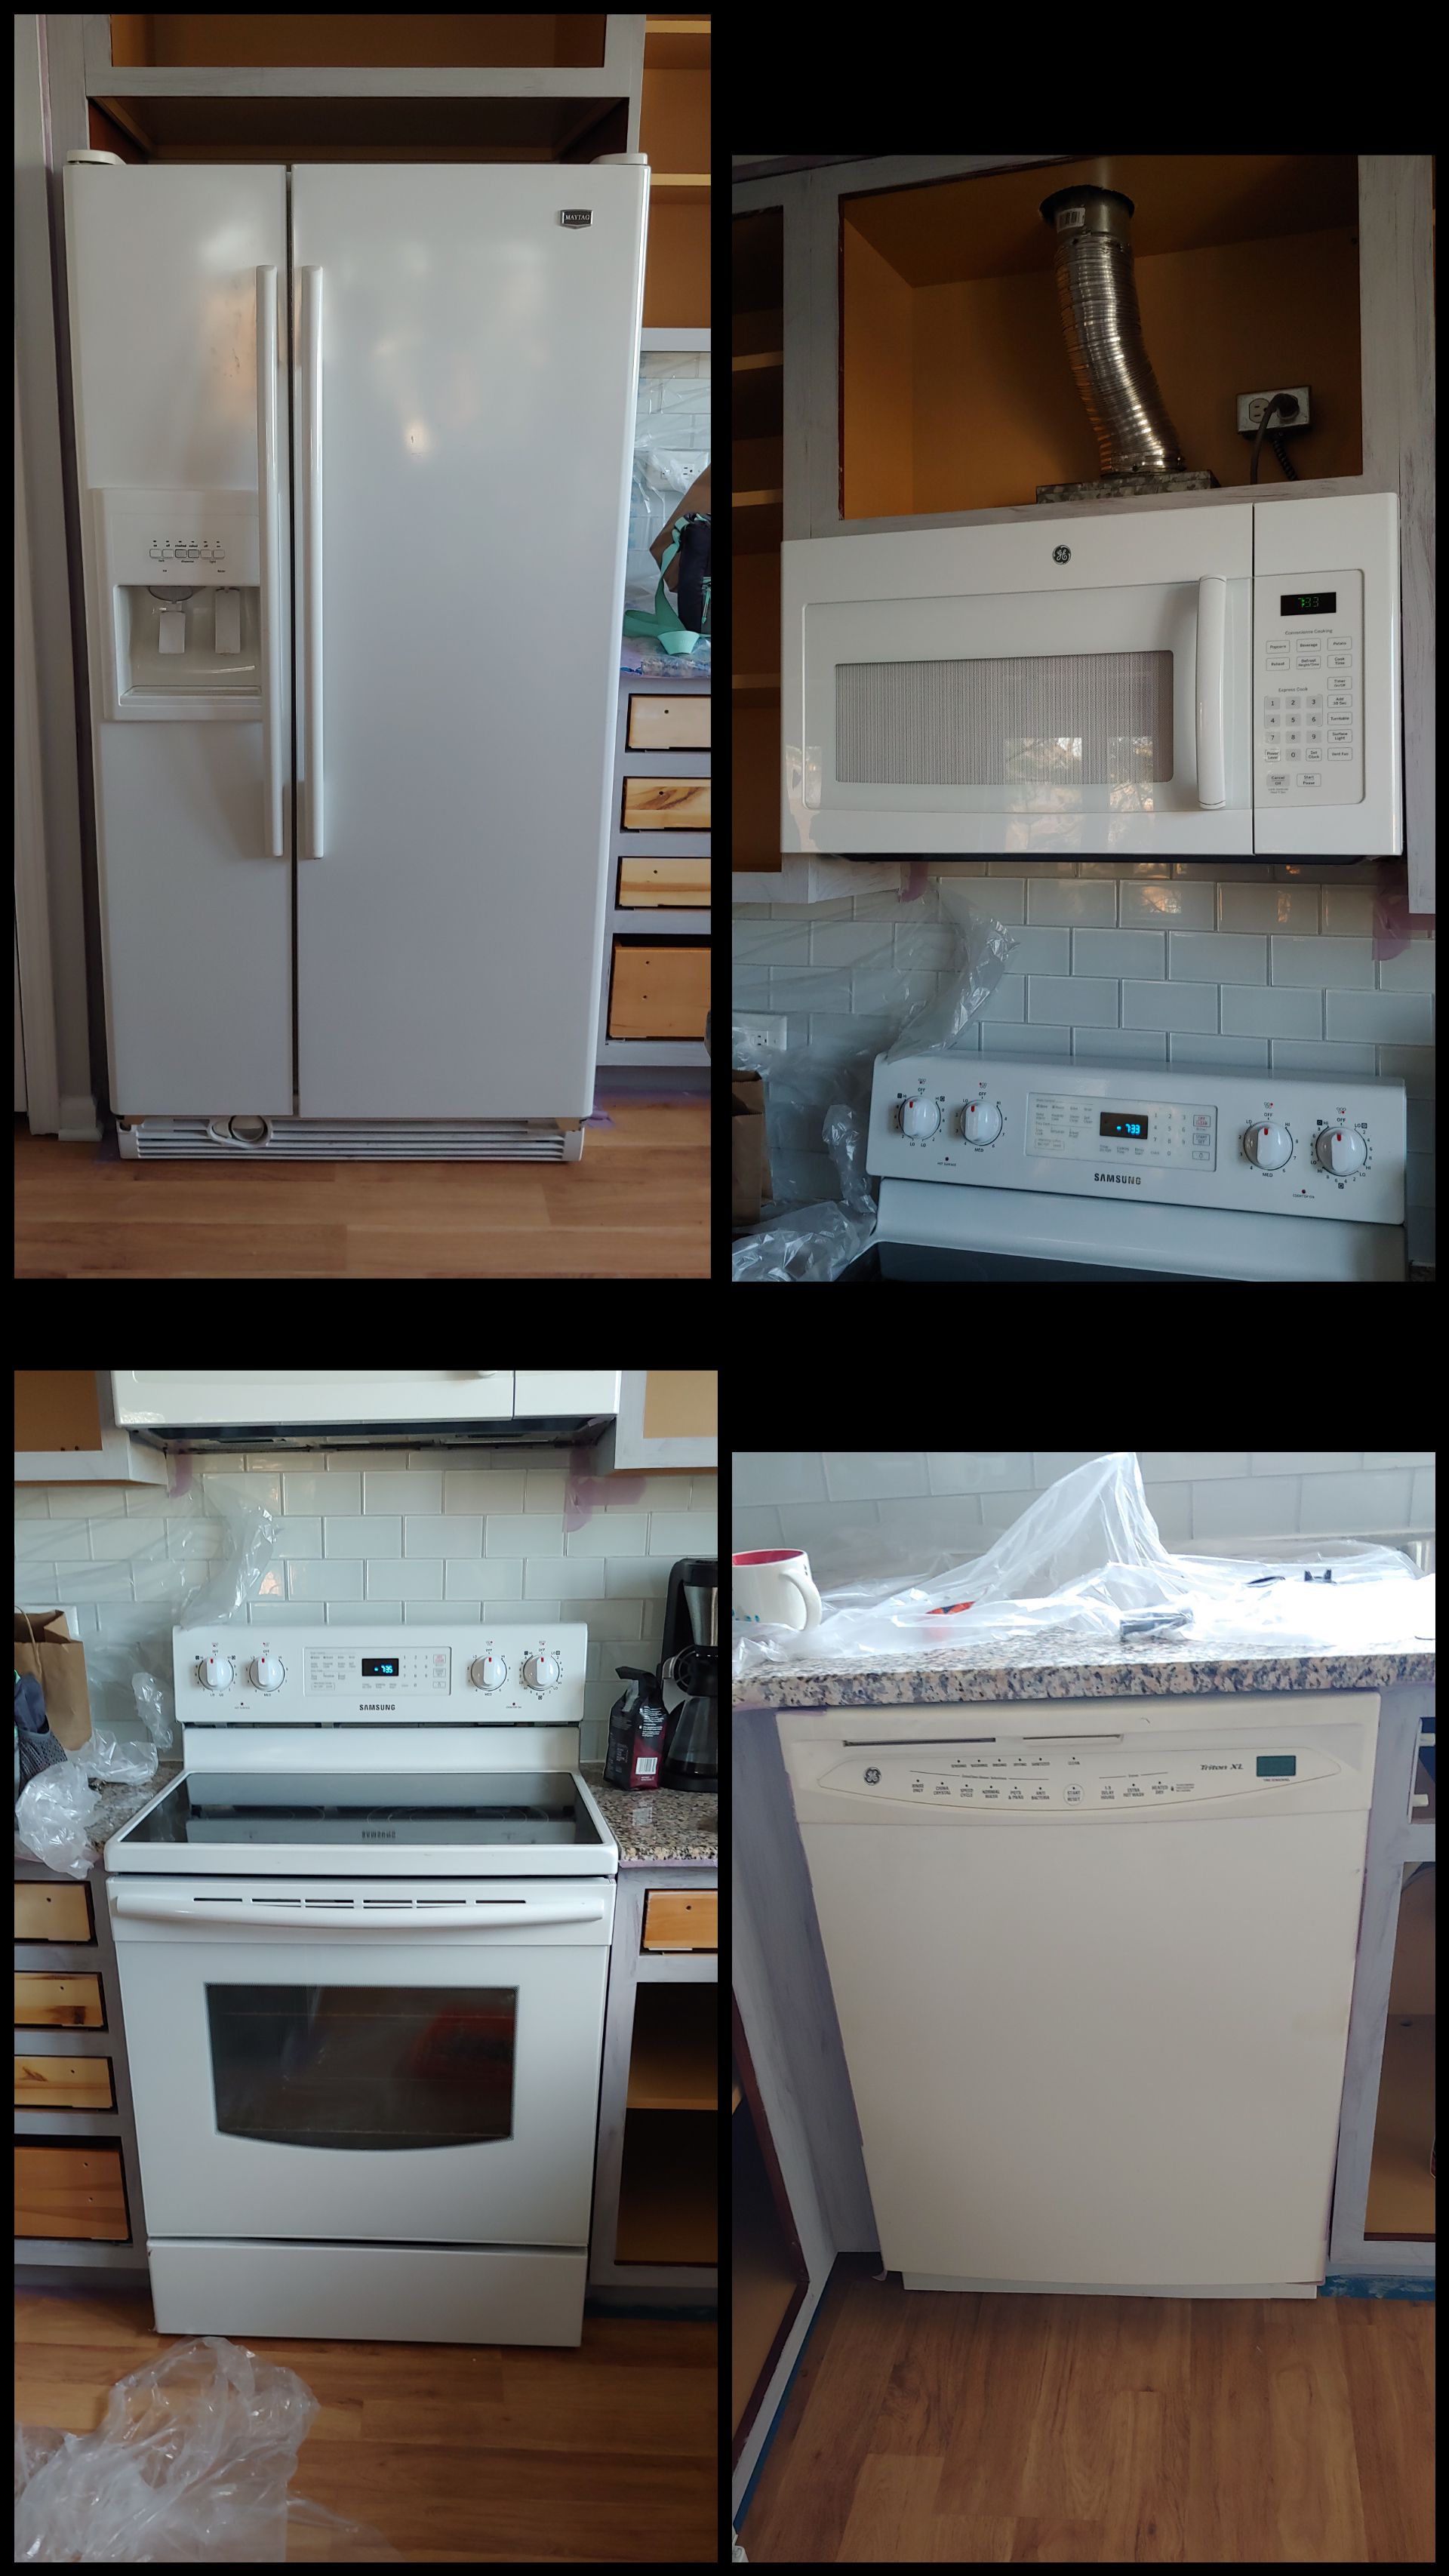 Maytag Fridge, GE Microwave, Samsung Electric Range and GE Dishwasher - set of 4, white